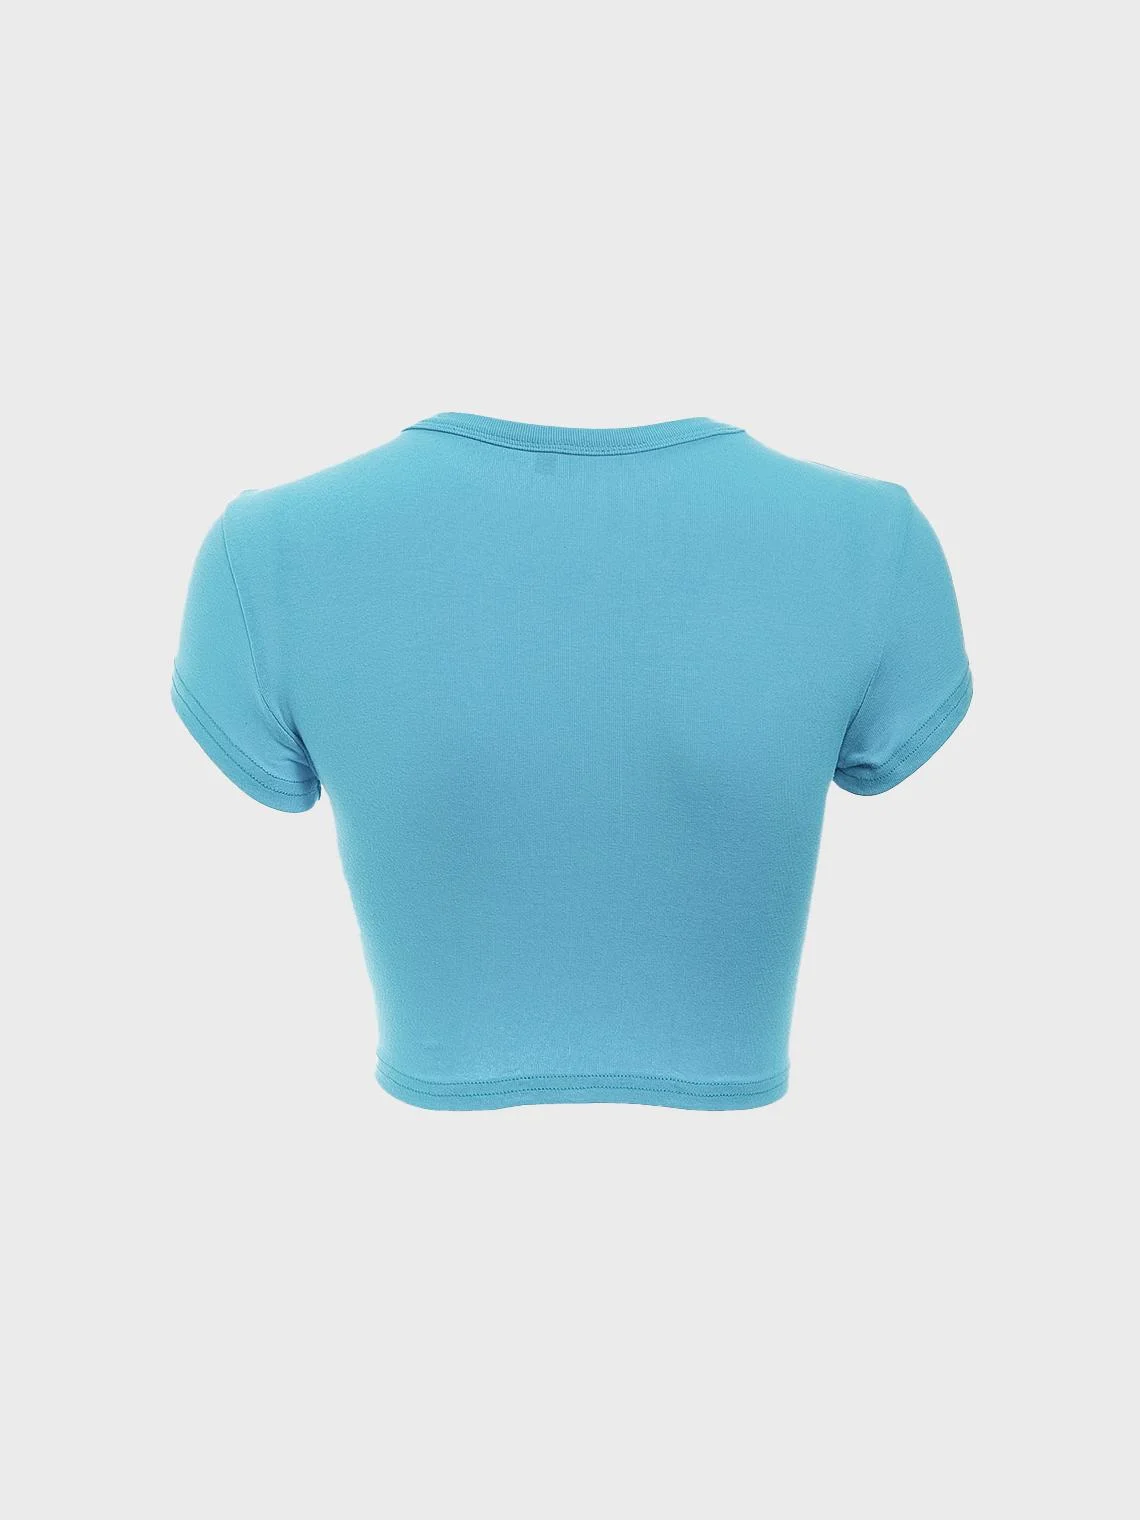 【Final Sale】Casual Blue Top T-Shirt